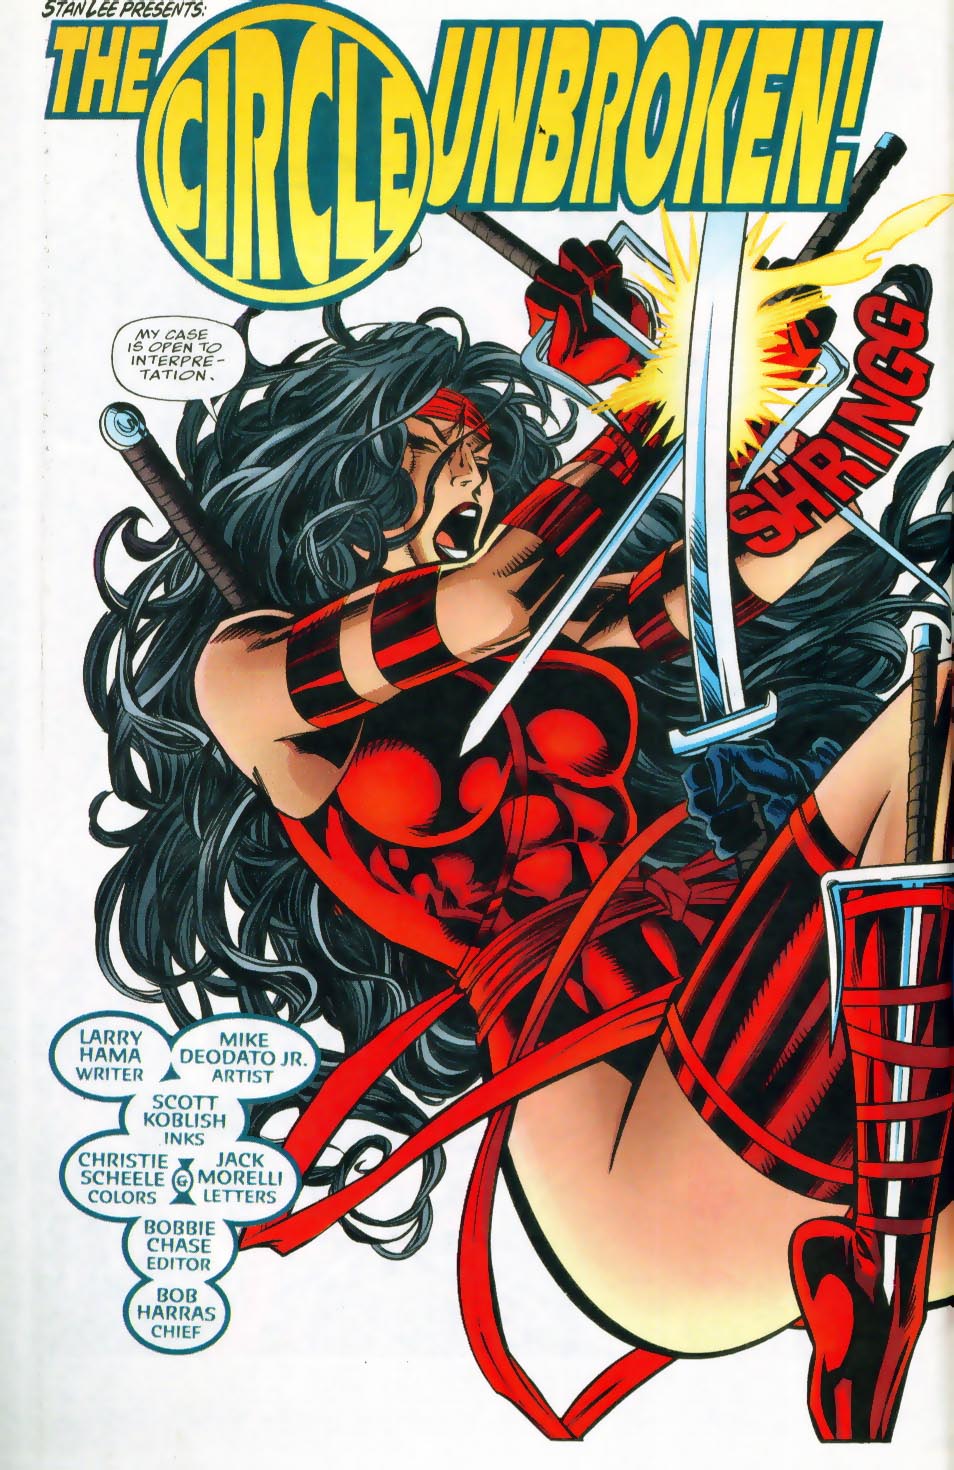 Elektra (1996) Issue #17 - The Circle Unbroken #18 - English 3